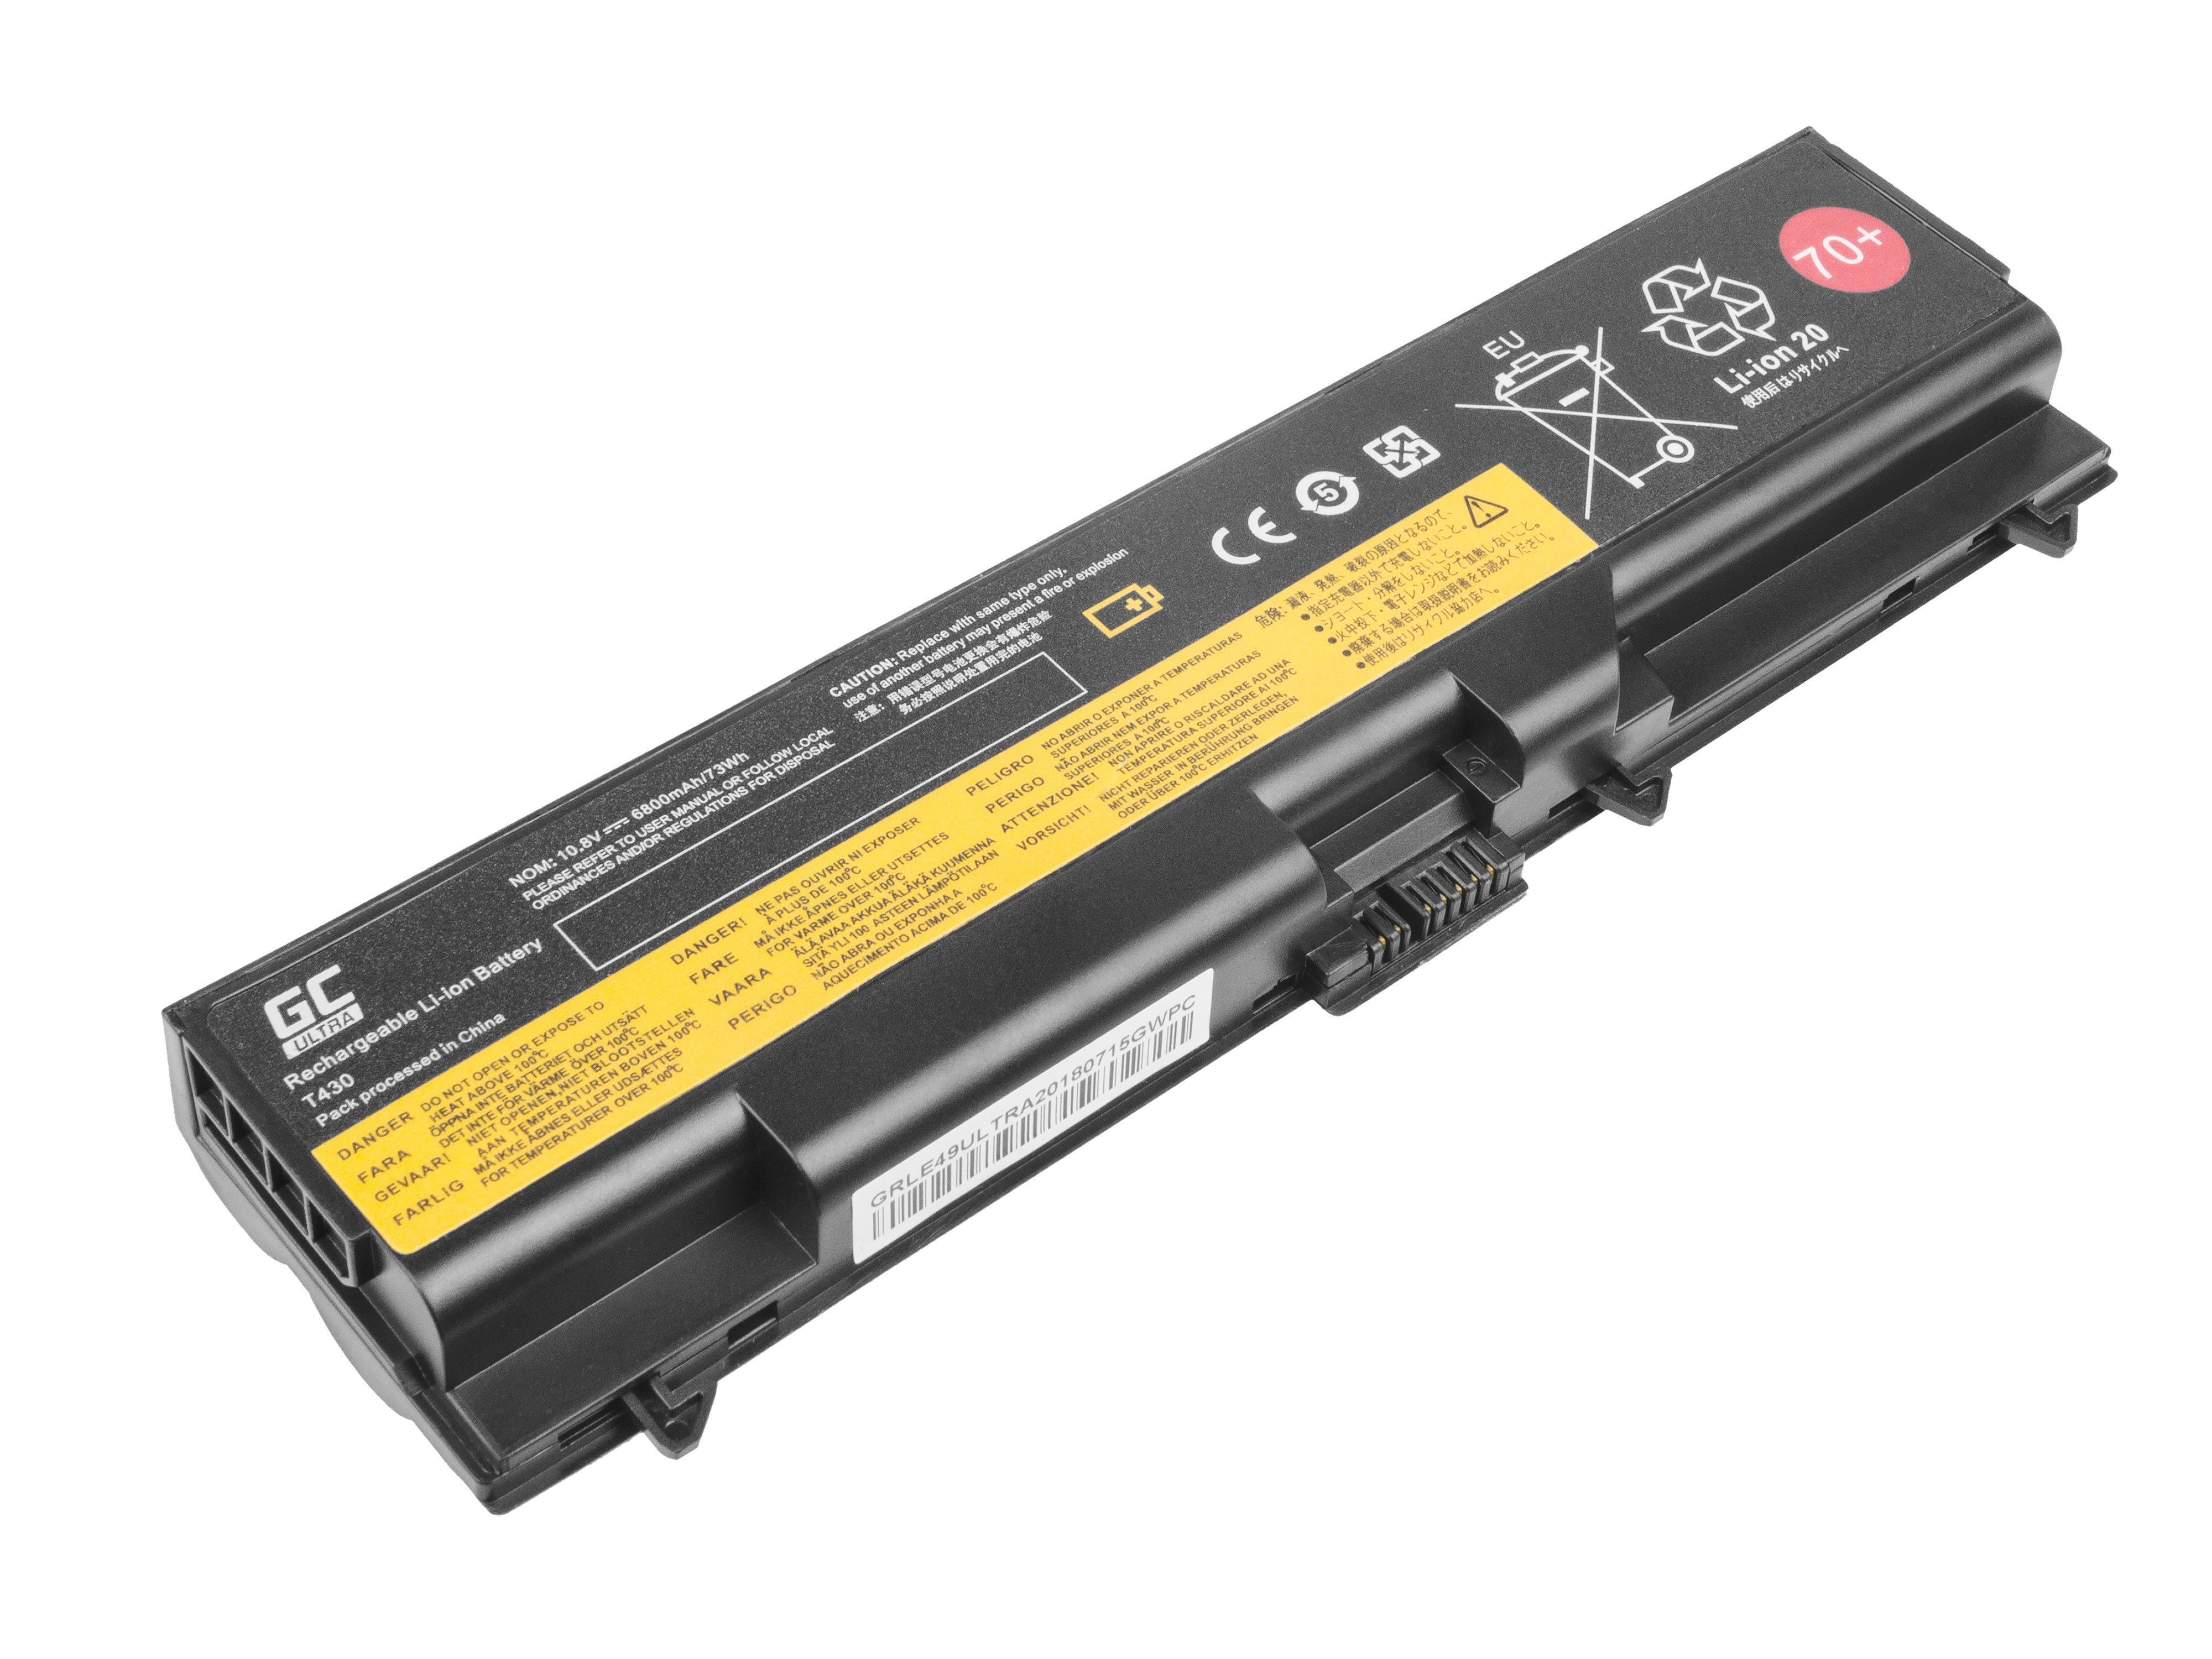 Green Cell Battery ULTRA 45N1001 for Lenovo ThinkPad L430 T430i L530 T430 T530 T530i